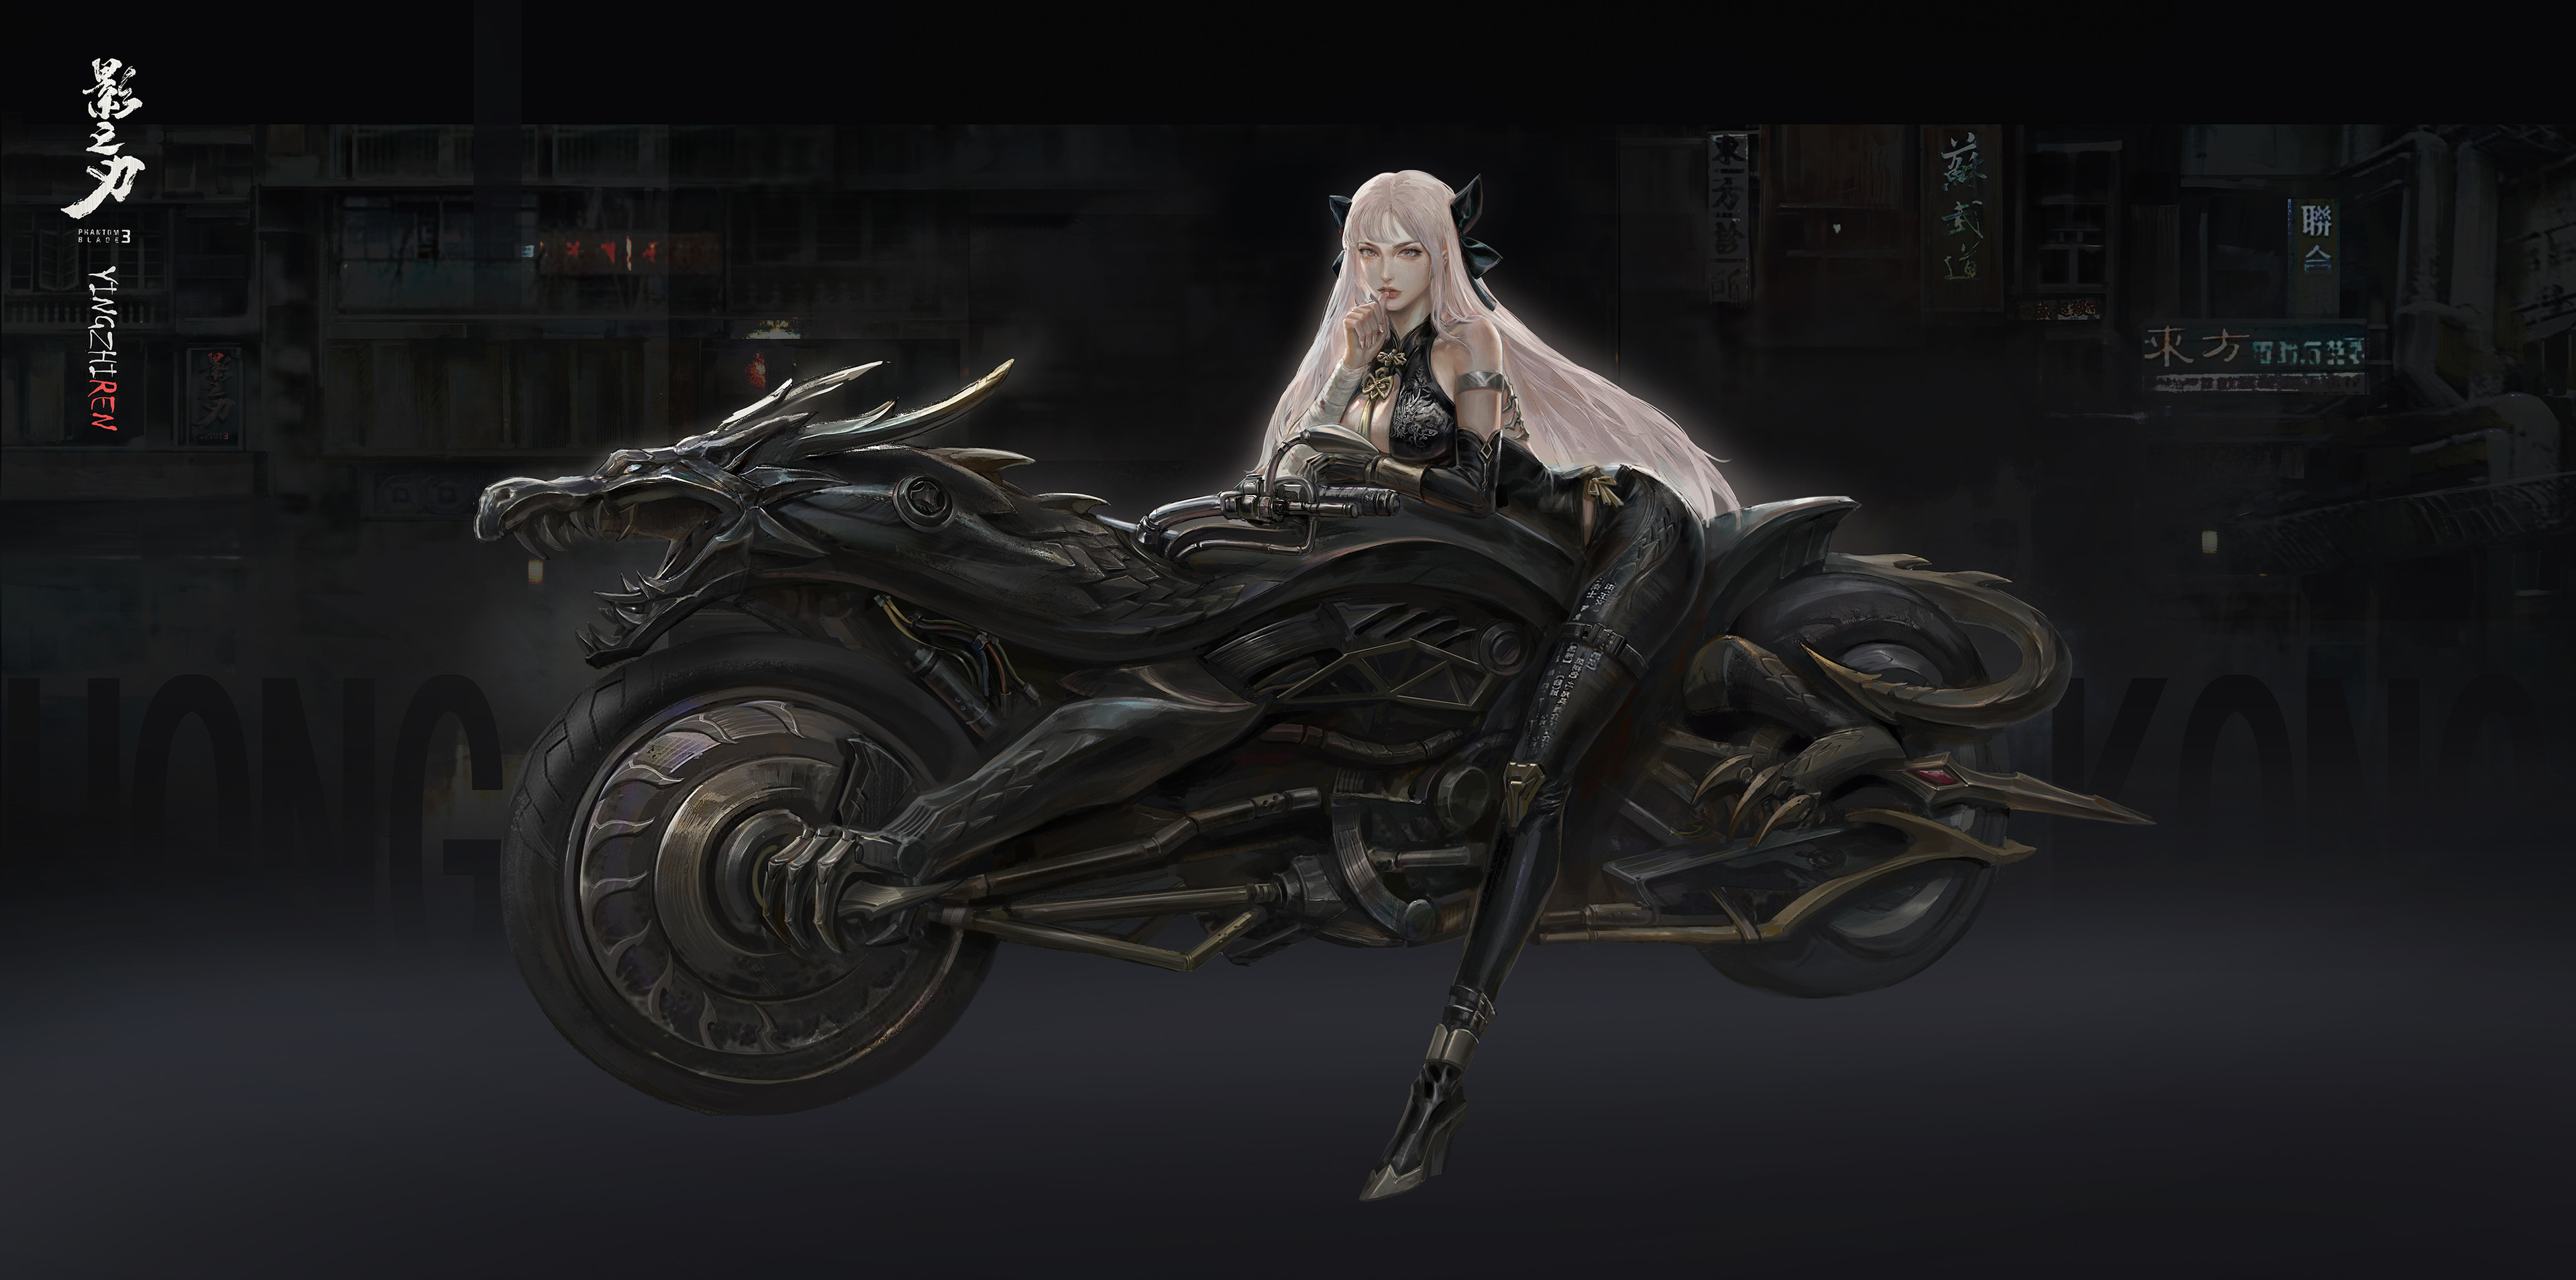 General 3840x1908 Yi Zhi drawing women long hair black clothing motorcycle dragon Chinese dragon loong